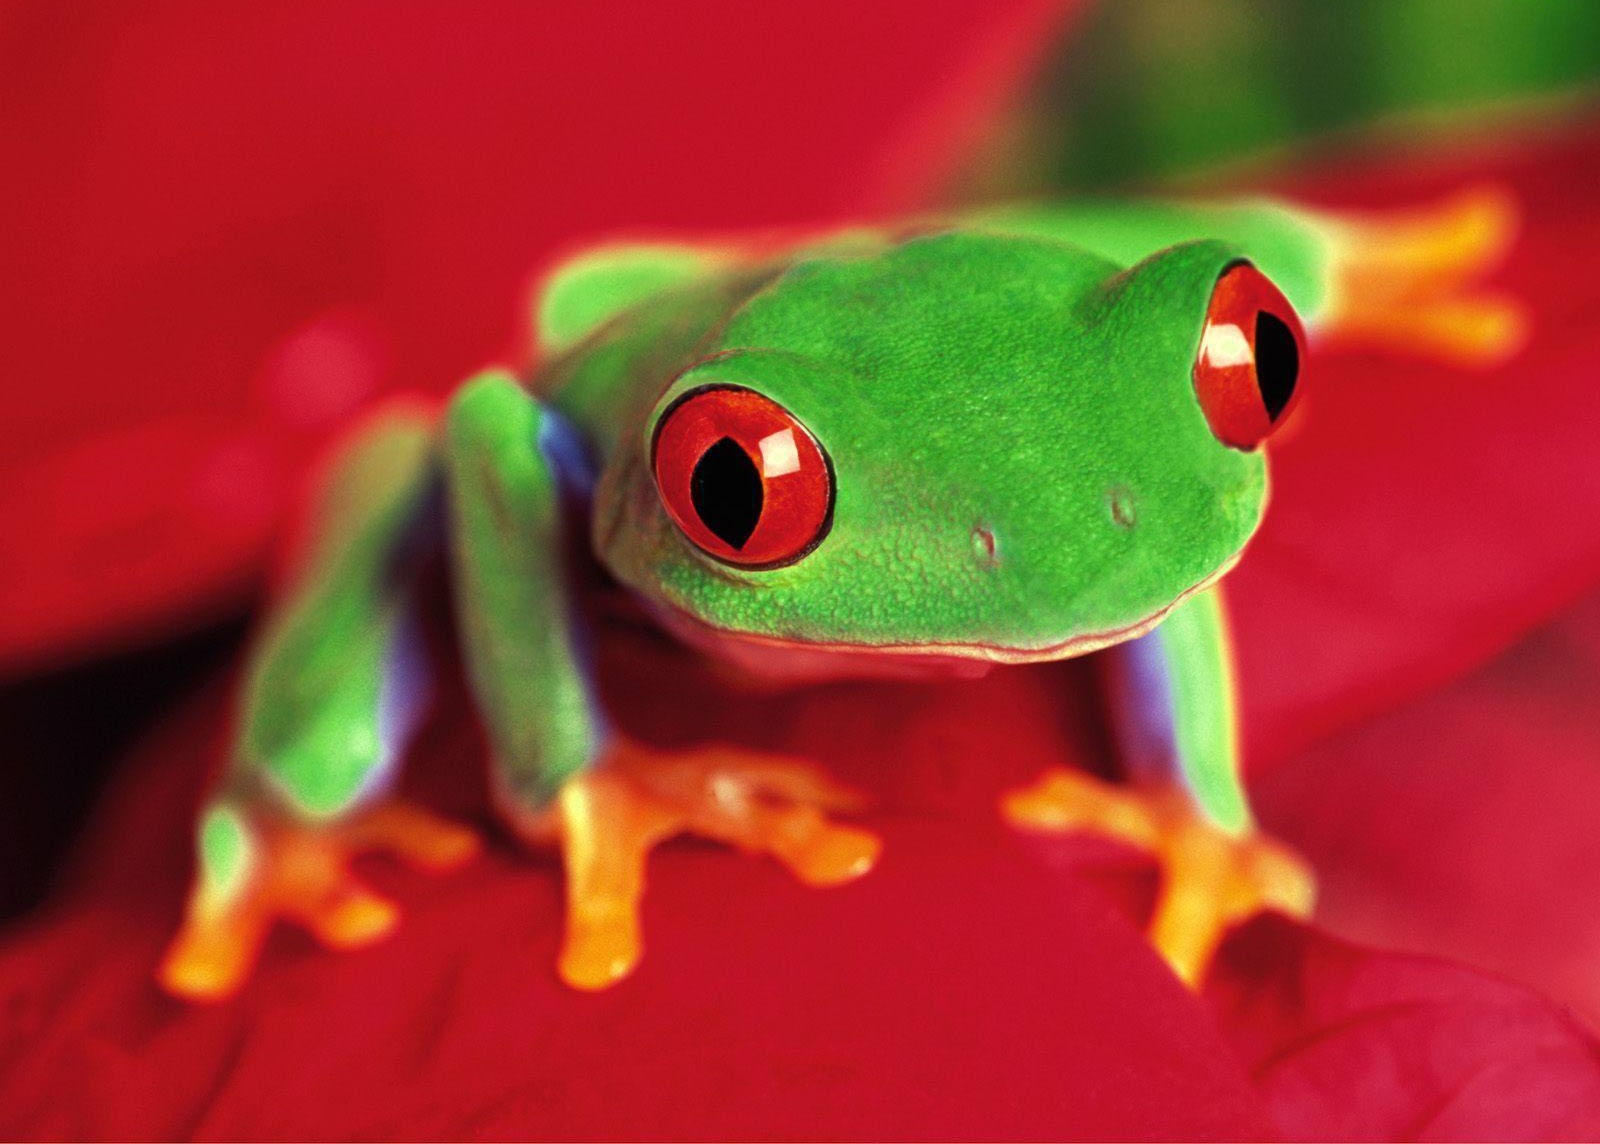 Green Frog Wallpaper